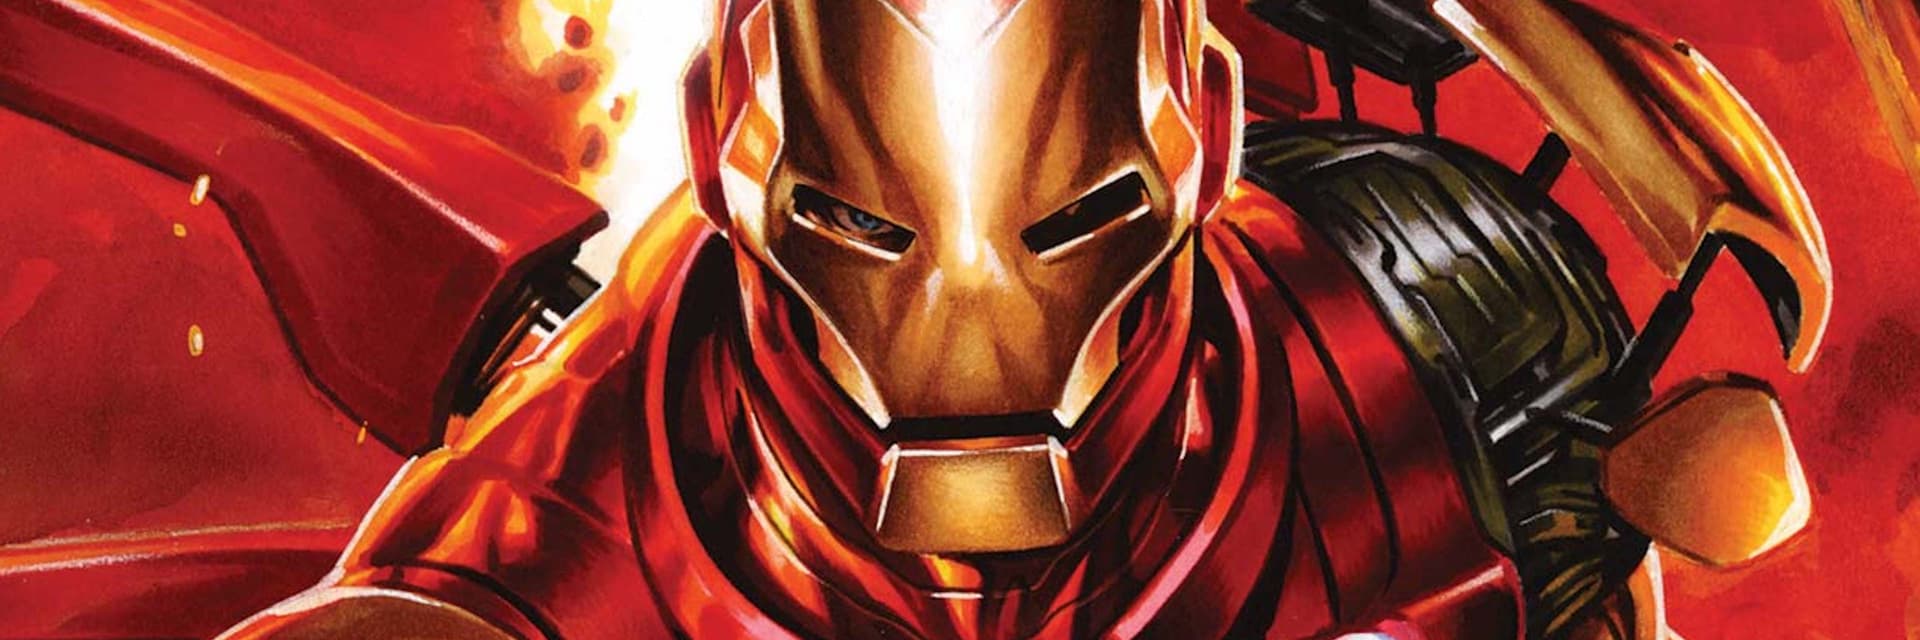 Set de Super-héros -héros 8 pièces - Captain America - Iron Man